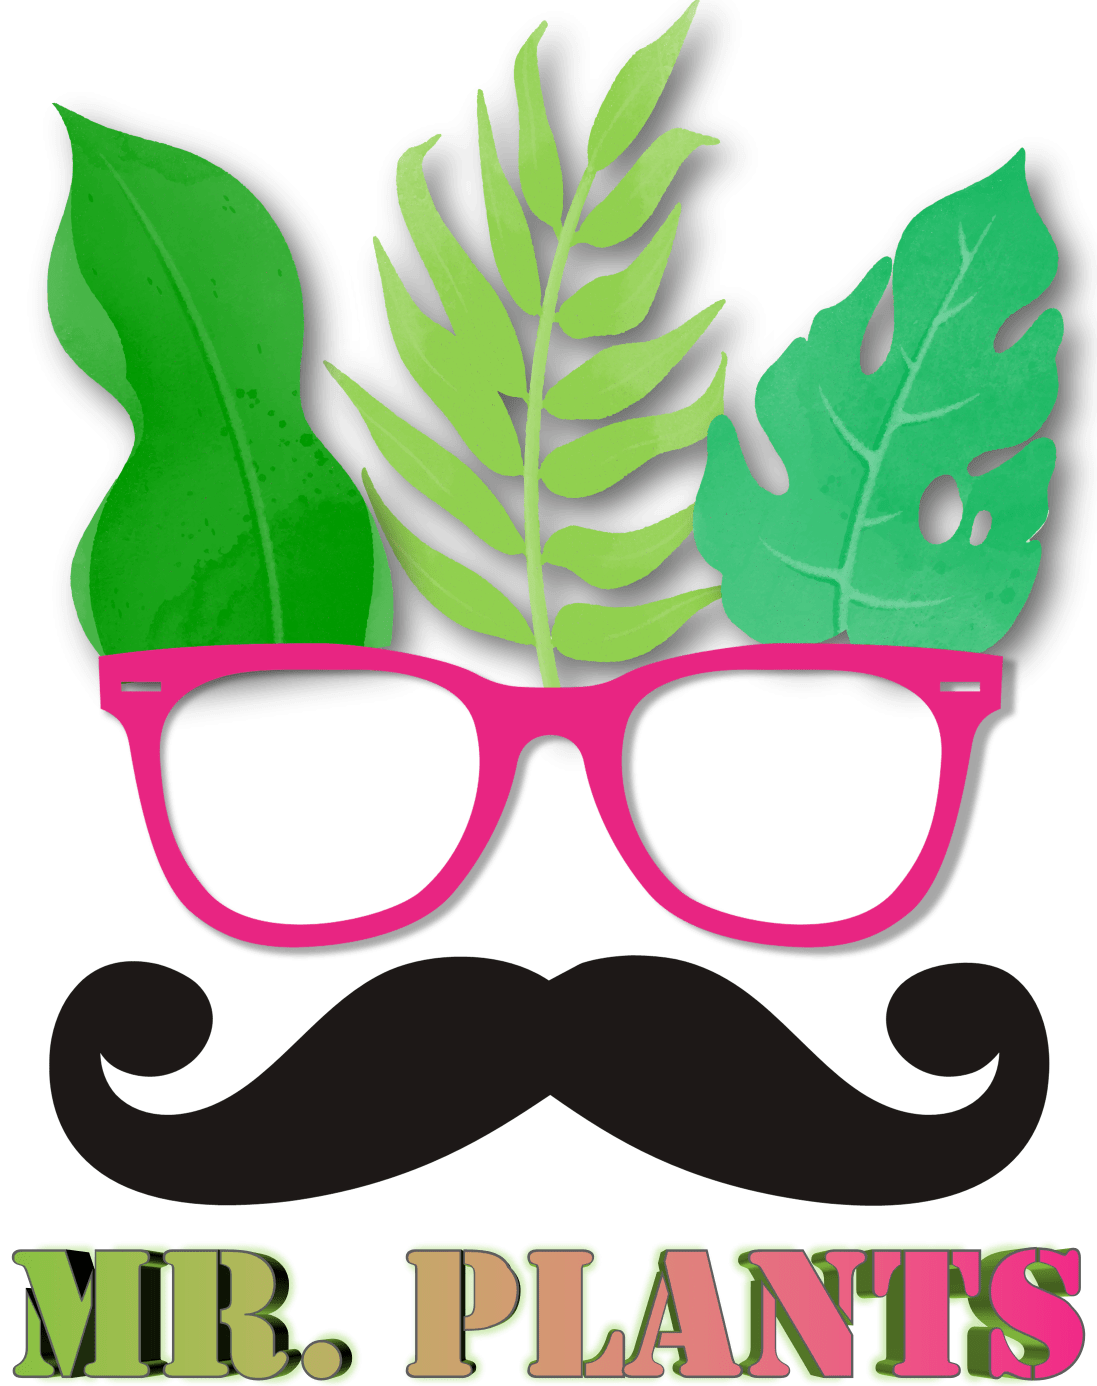 Mr. Plants - Exotic Houseplants & Accessories